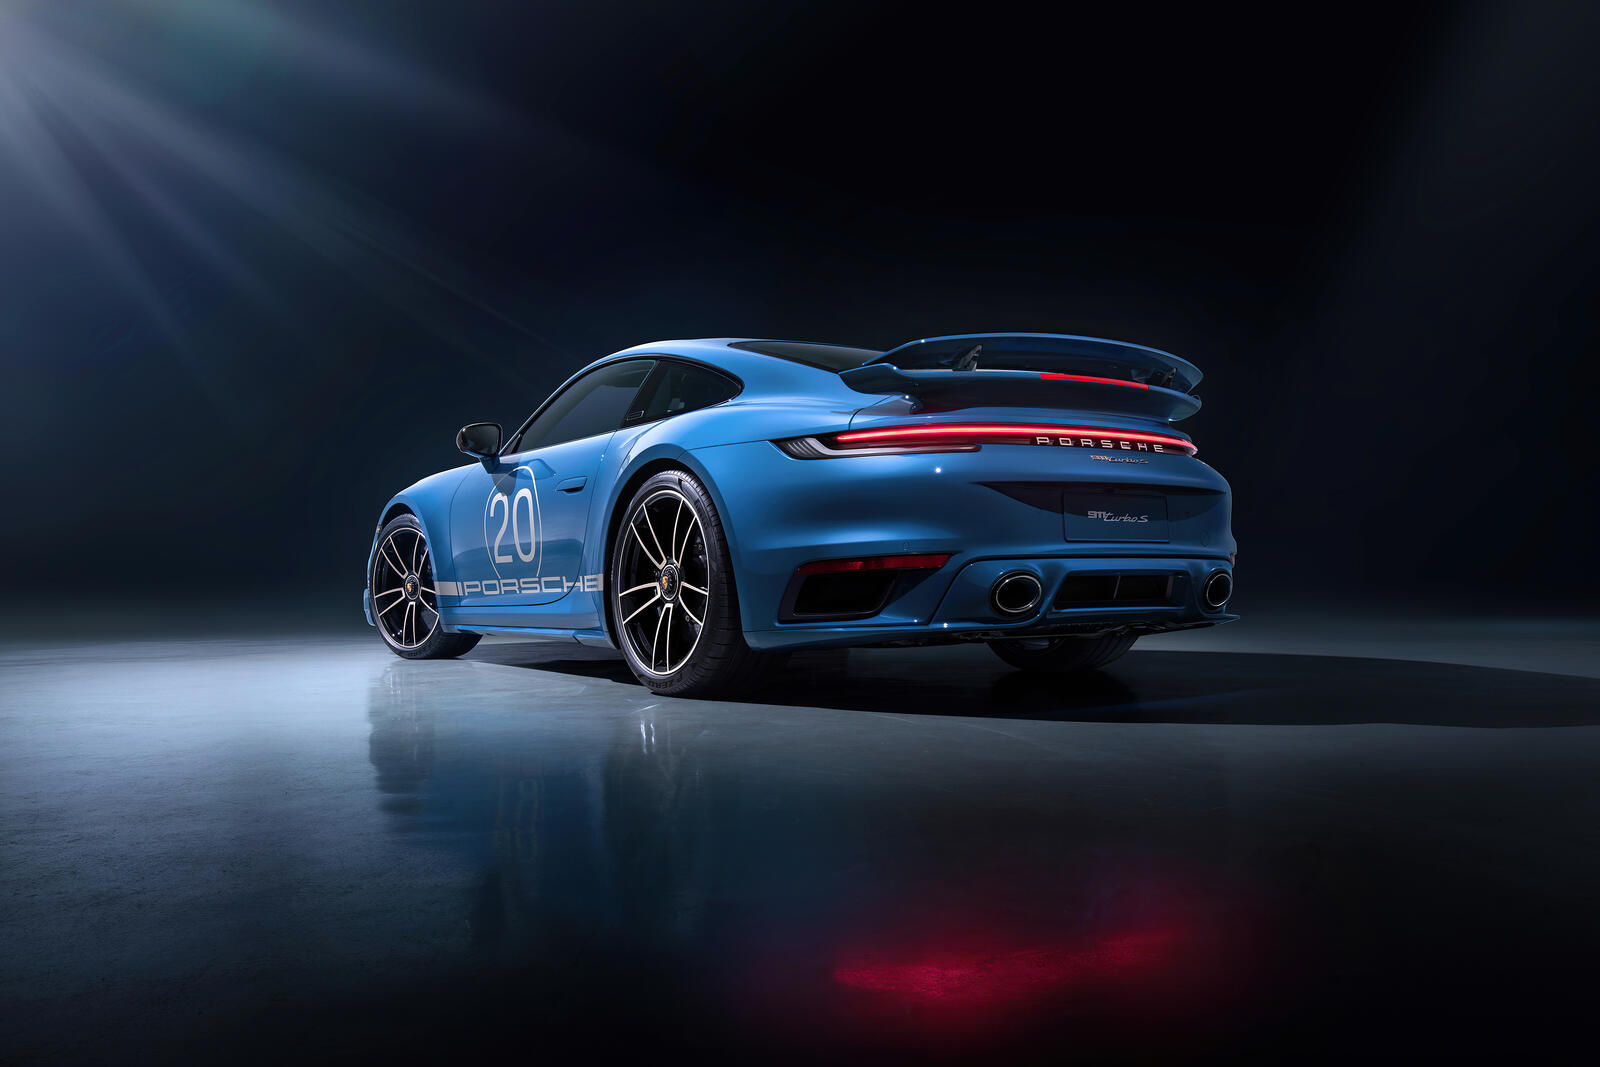 Free photo Picture of a blue colored Porsche 911 in a dark room